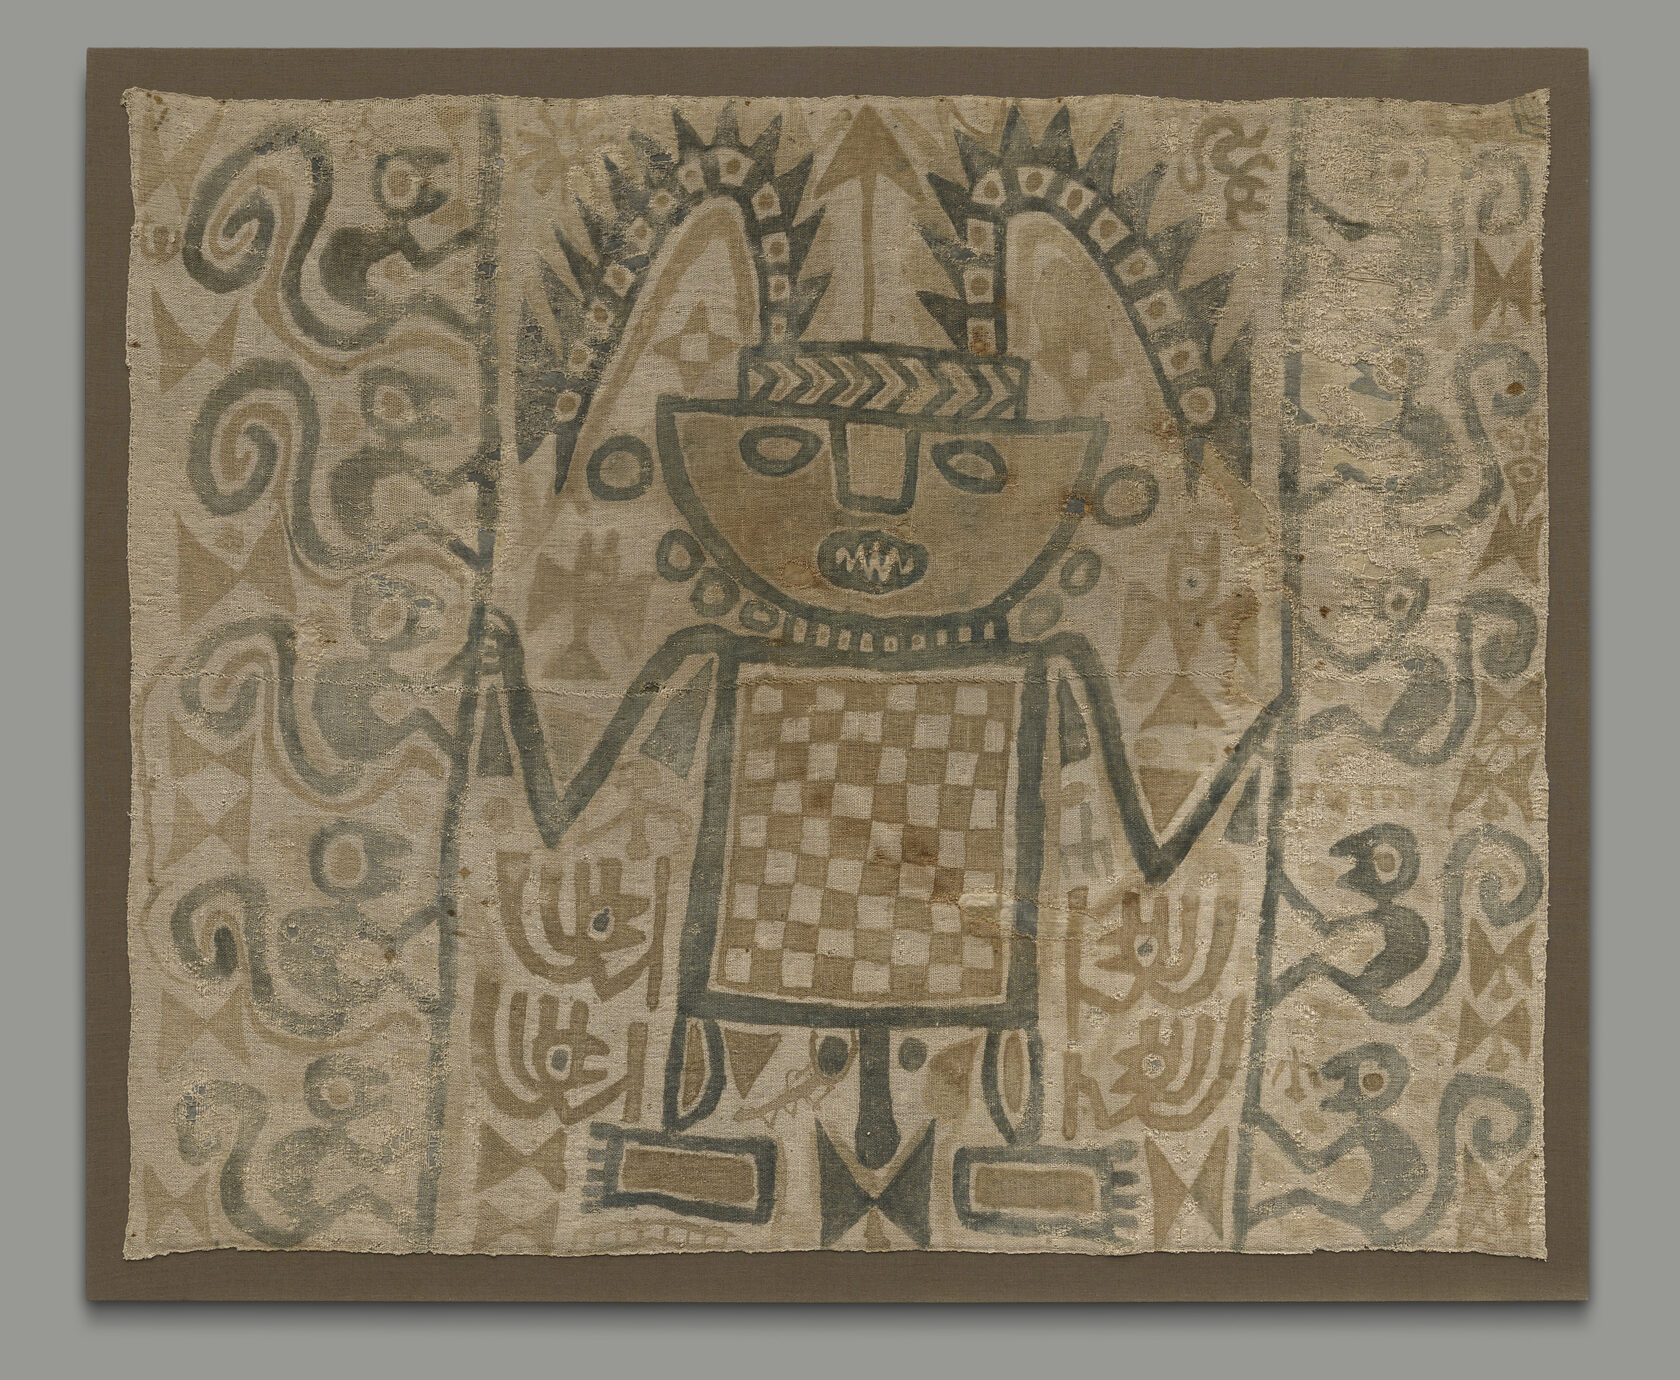 Ткань, Перу, Чанкай/Чиму, 800-1200 гг. н.э. Коллекция The Yale University Art Gallery, New Haven, Connecticut.